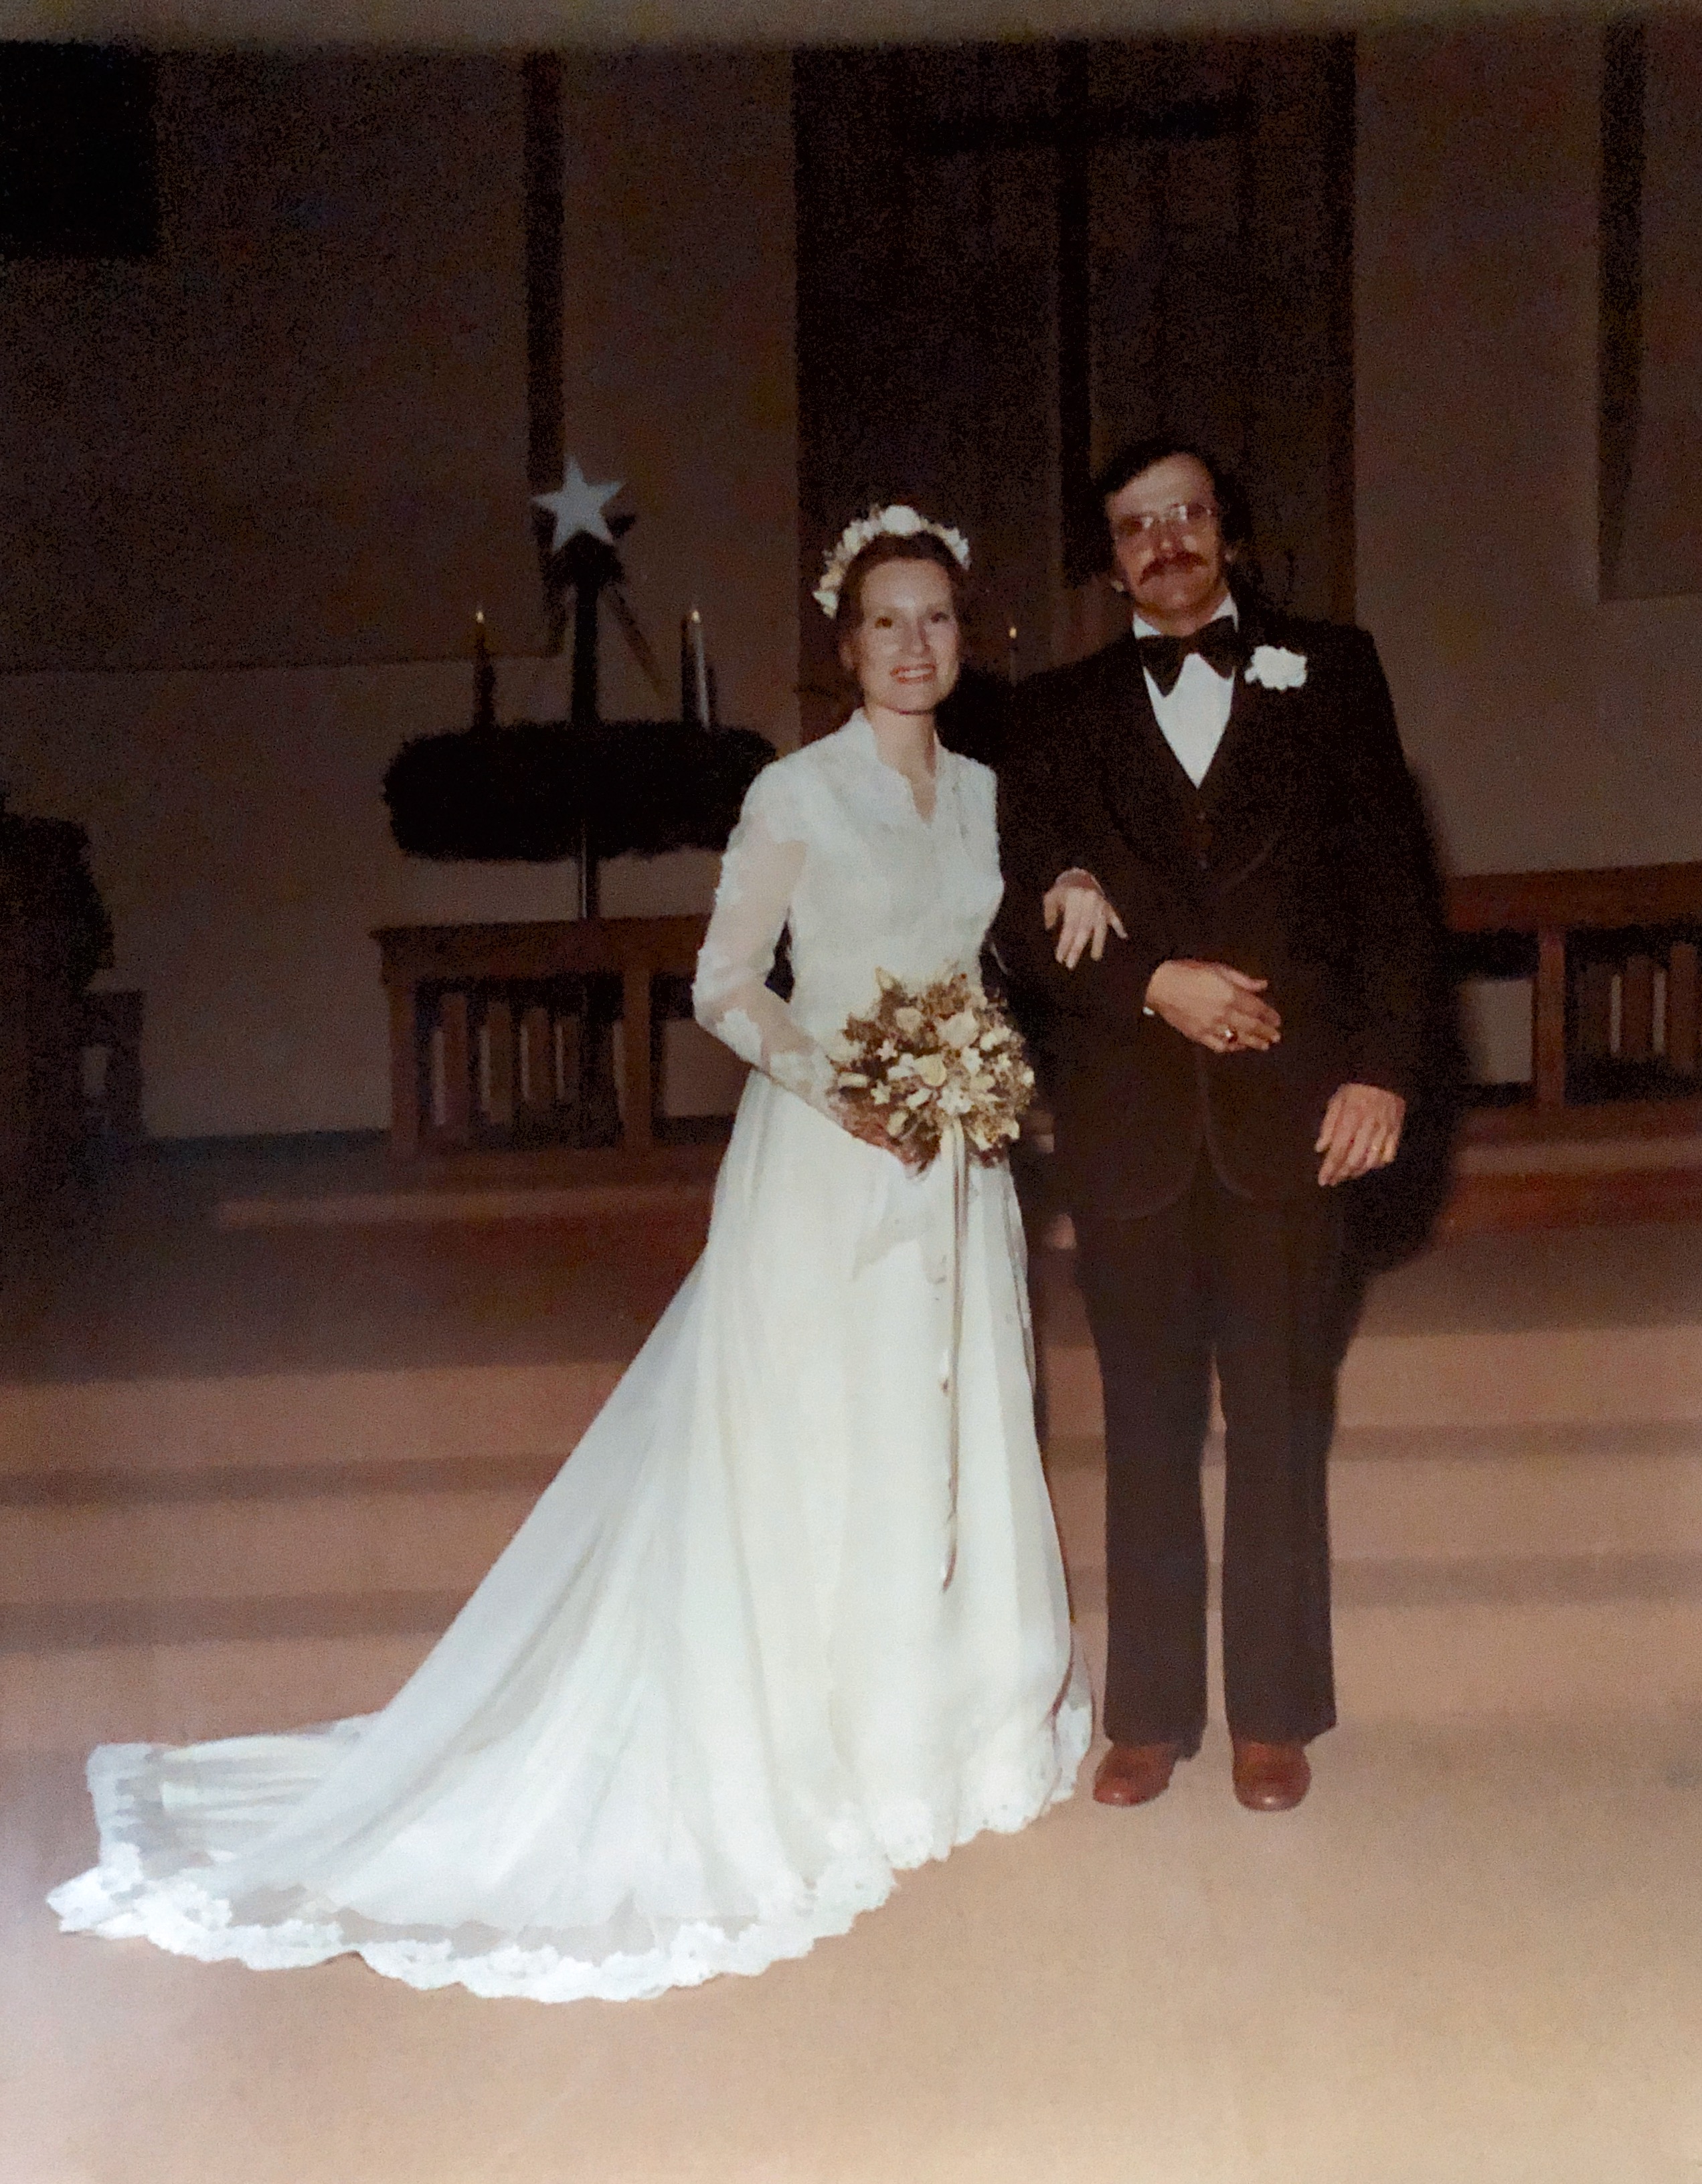 Norman and Katie Oleen Norton on wedding day, December 16, 1978 at St. Luke’s Lutheran Church, Monroe, NC